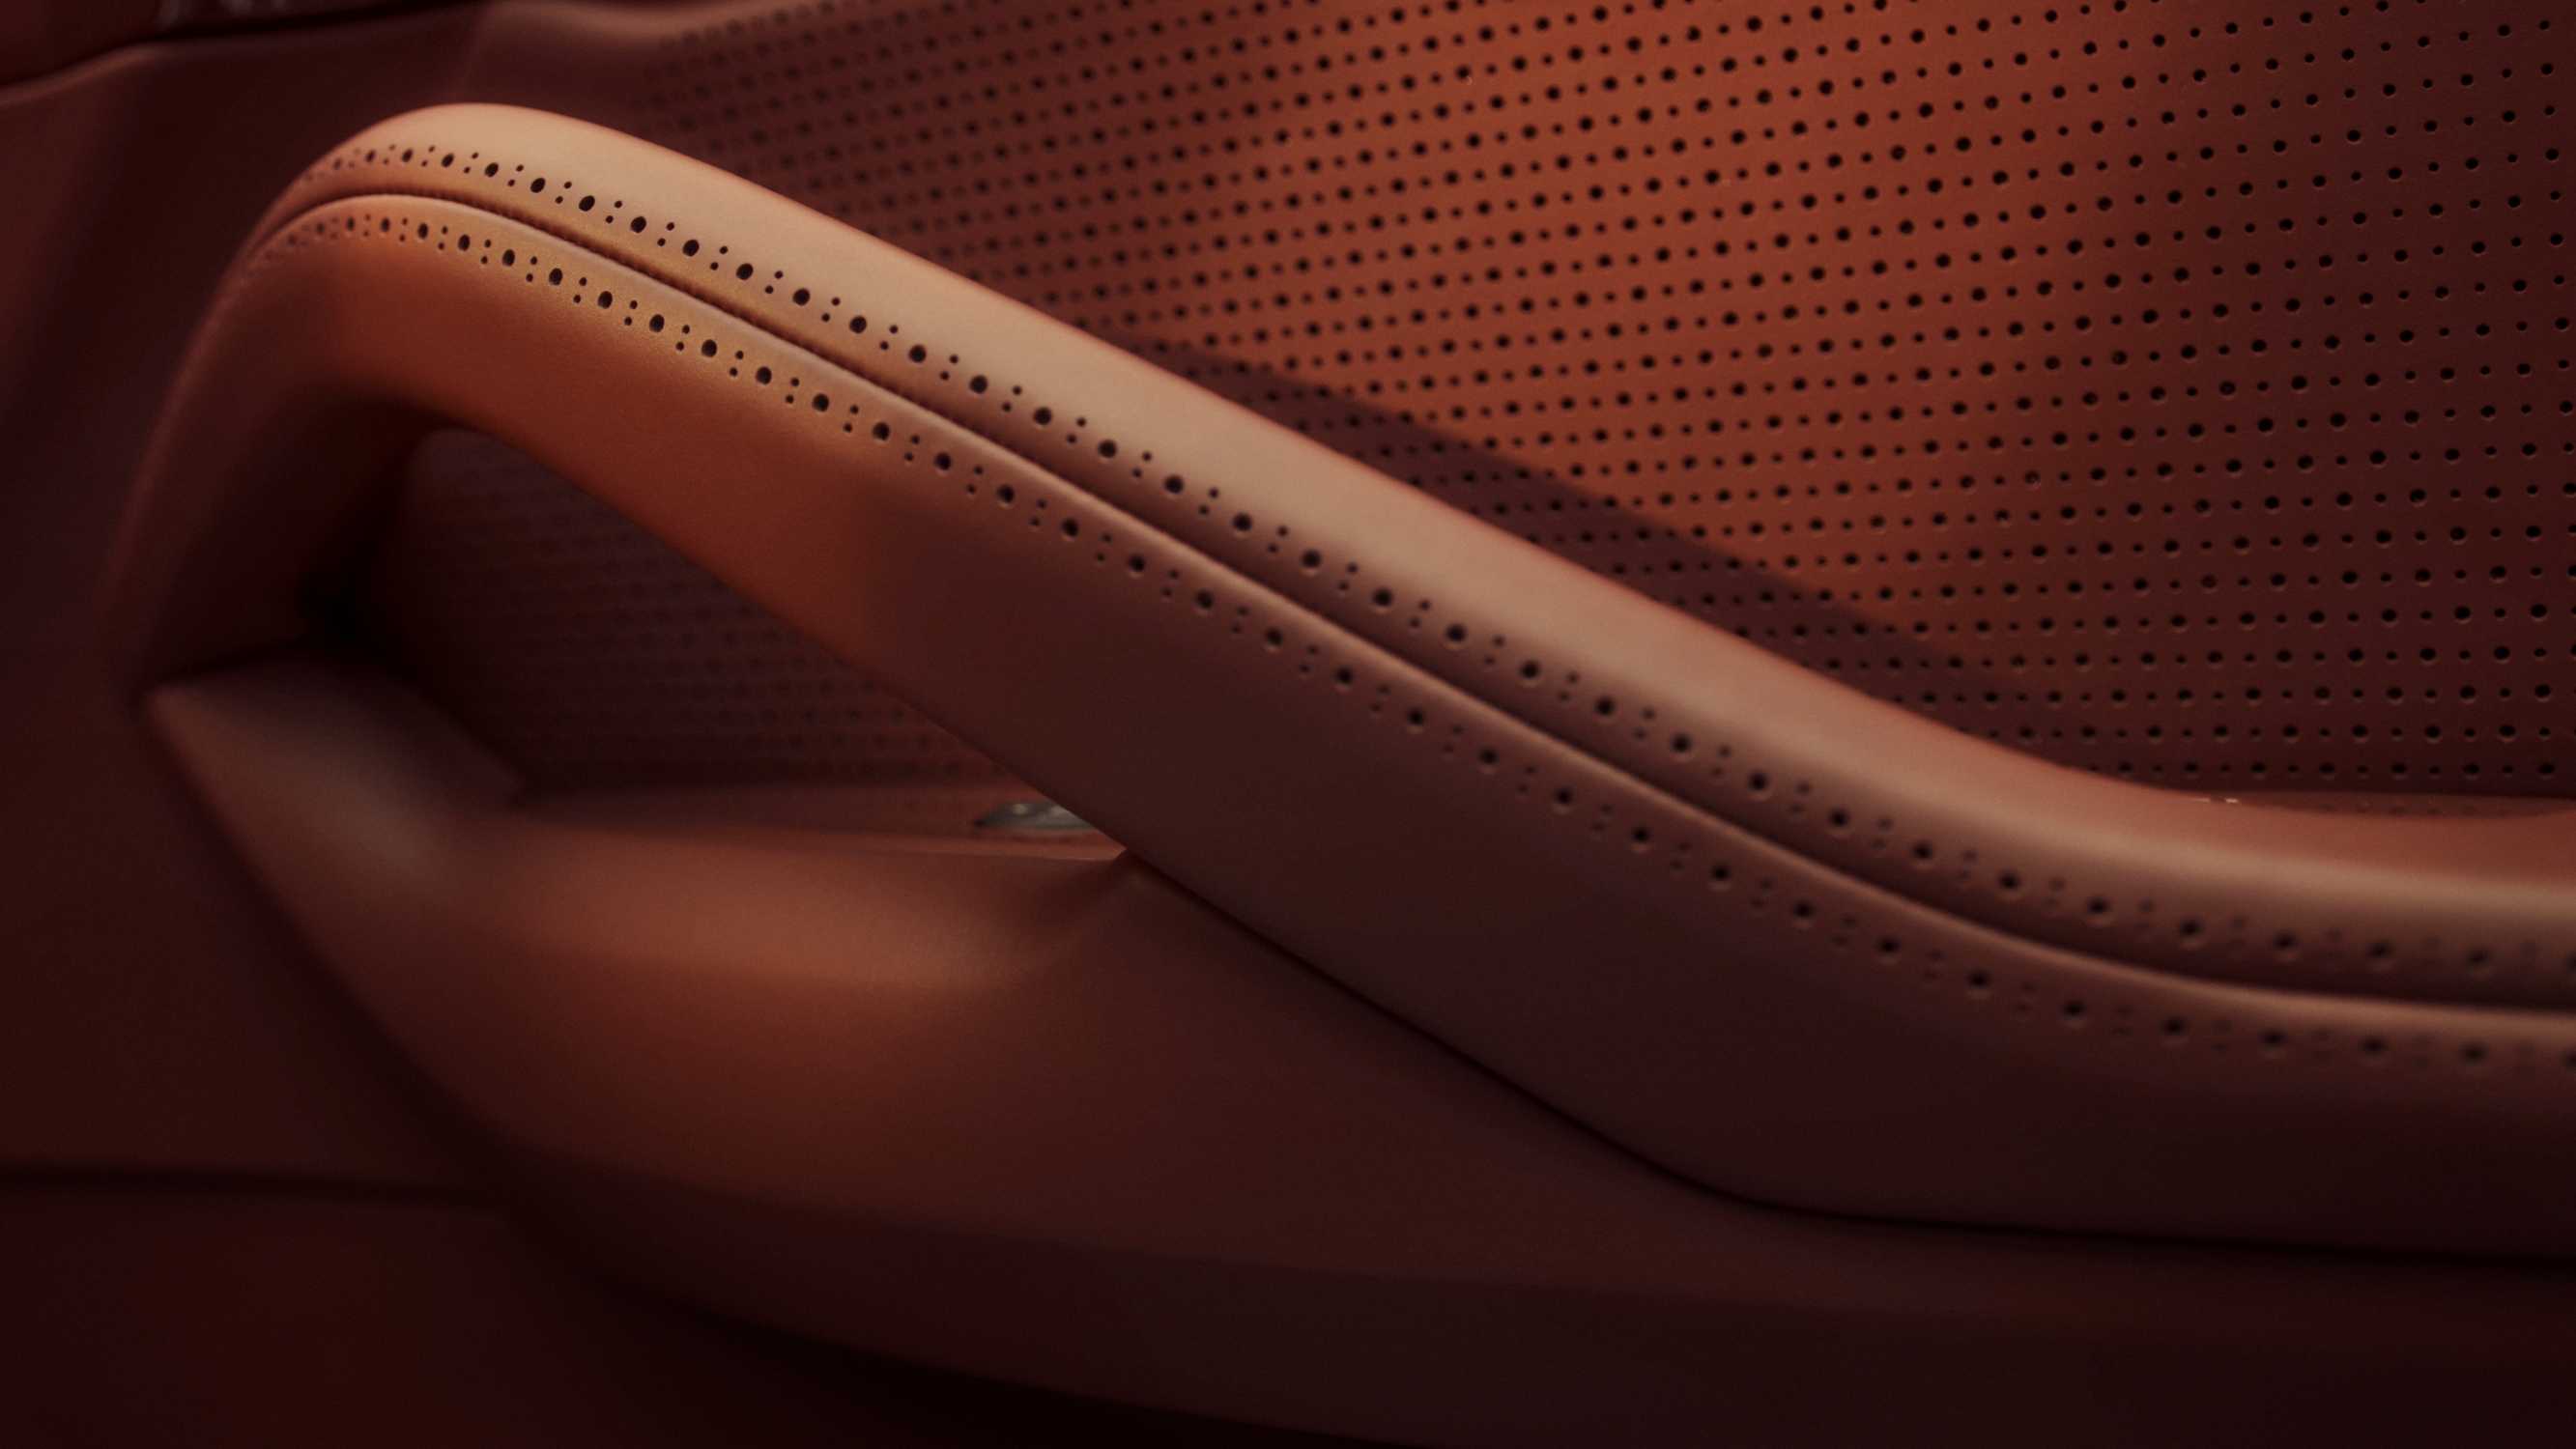 BMW Concept Skytop - Inform (05/24)